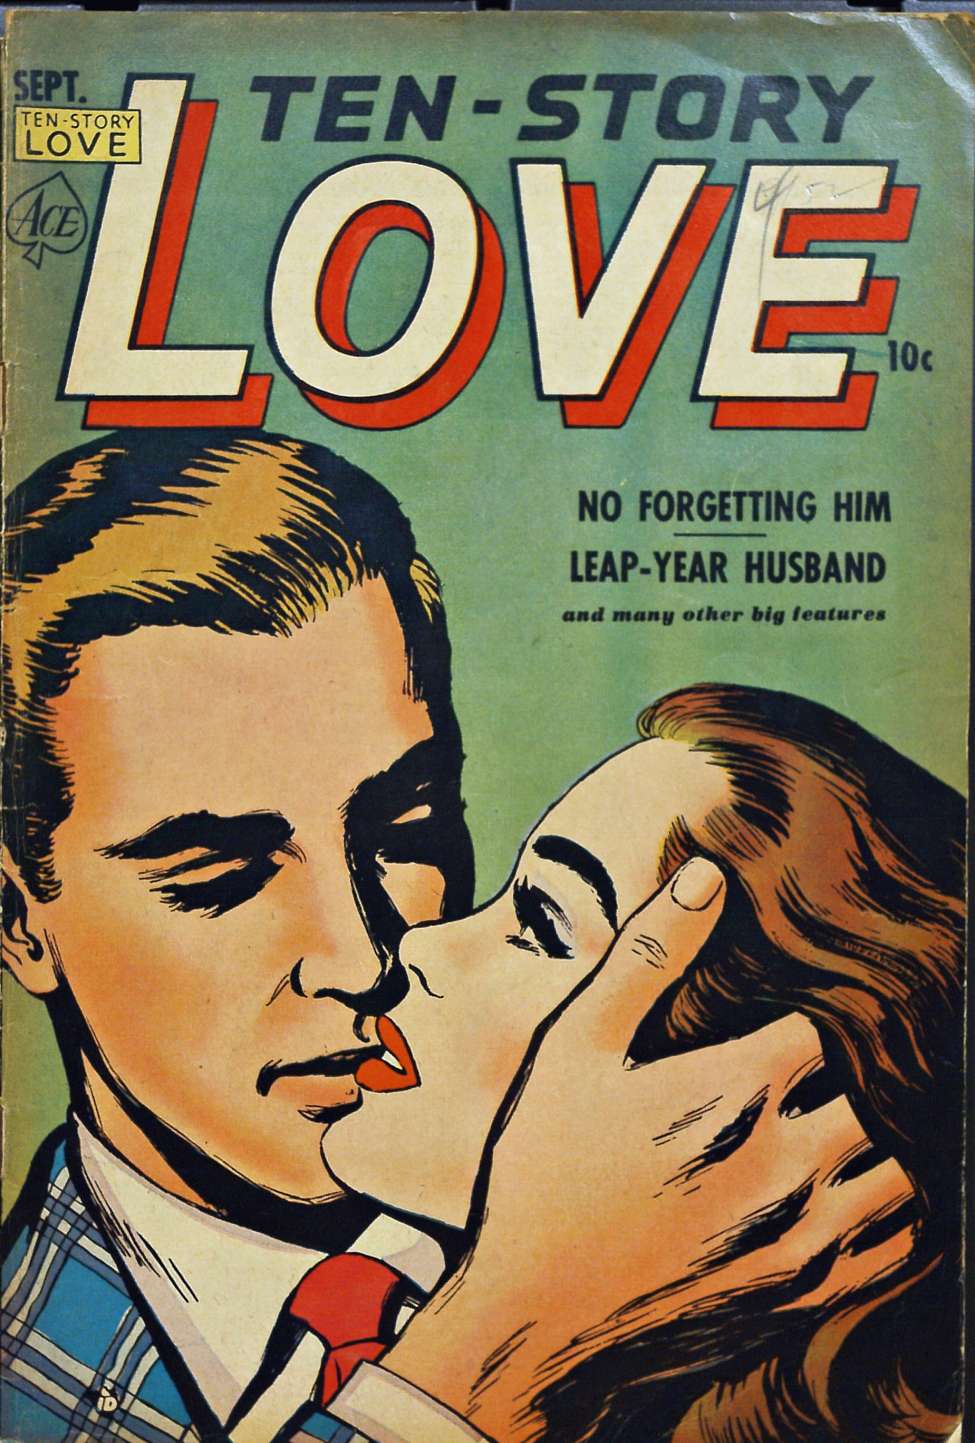 Comic Book Cover For Ten-Story Love v30 4 (184)